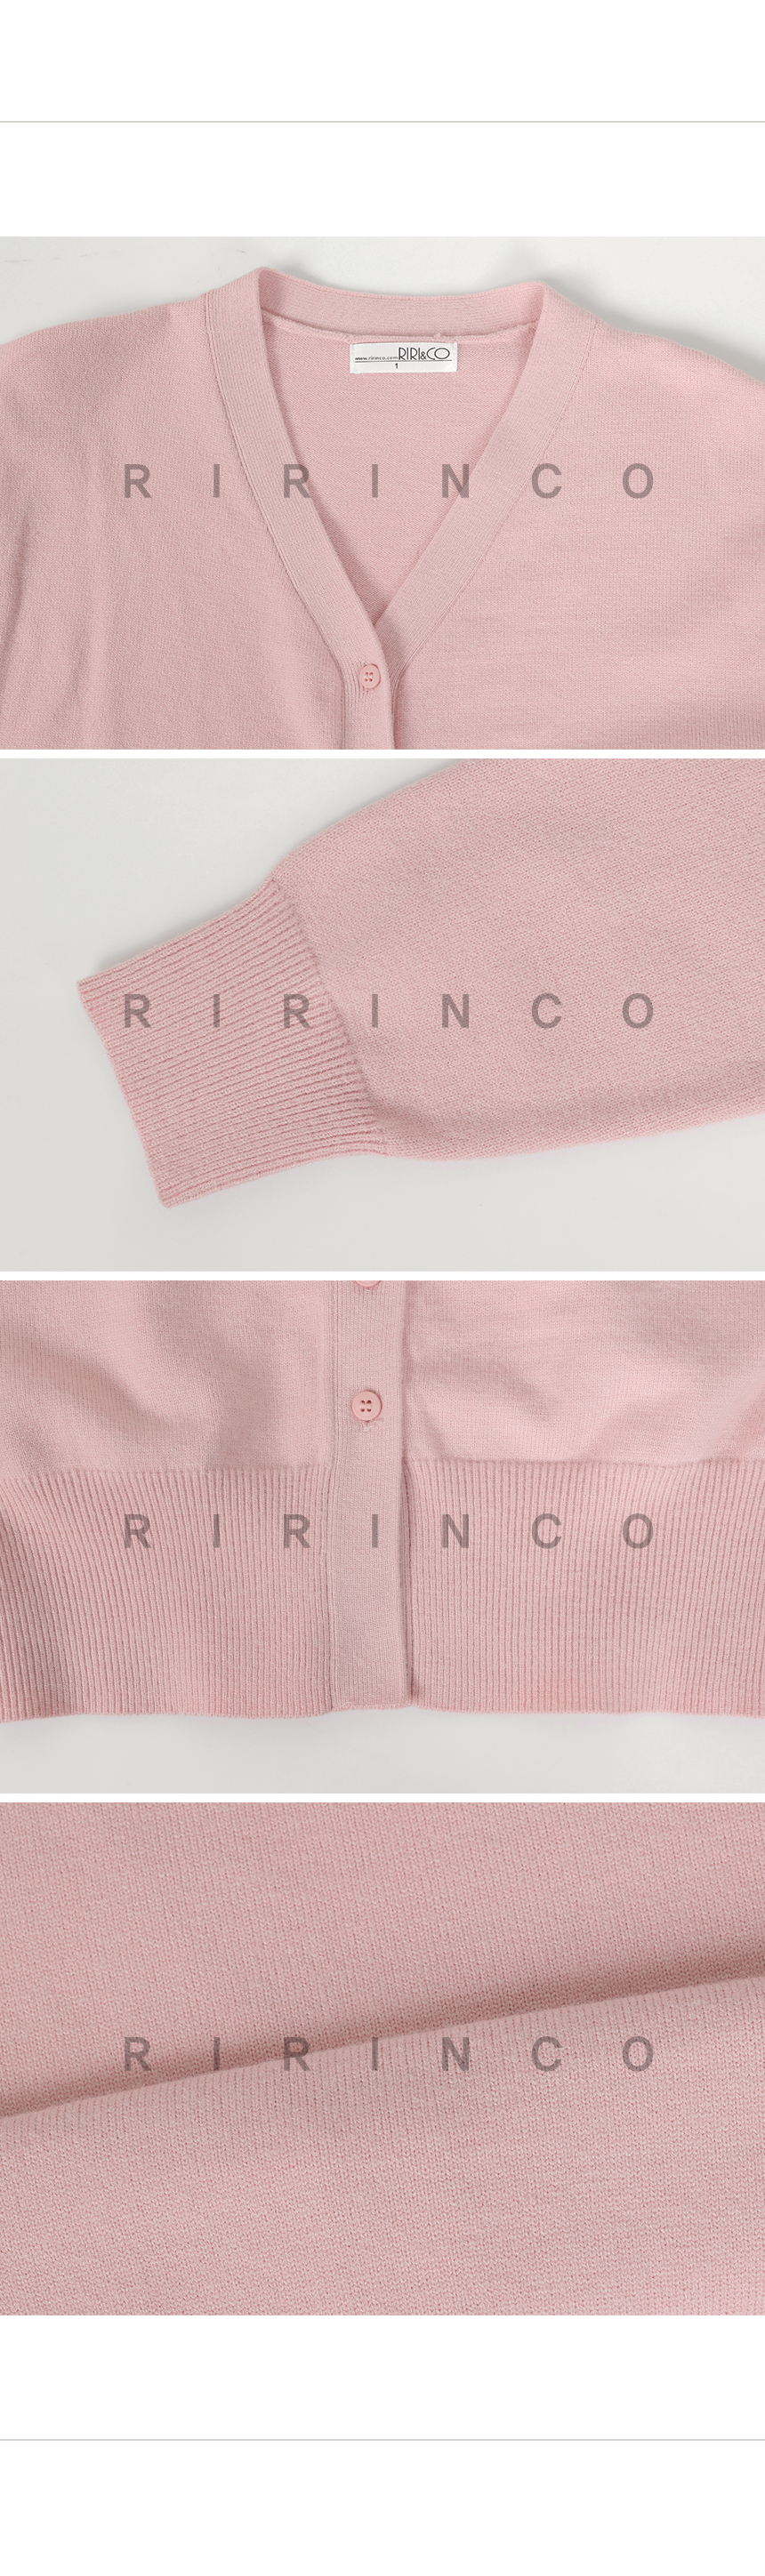 RIRINCO Ⅴネックセミクロップド丈ニットカーディガン